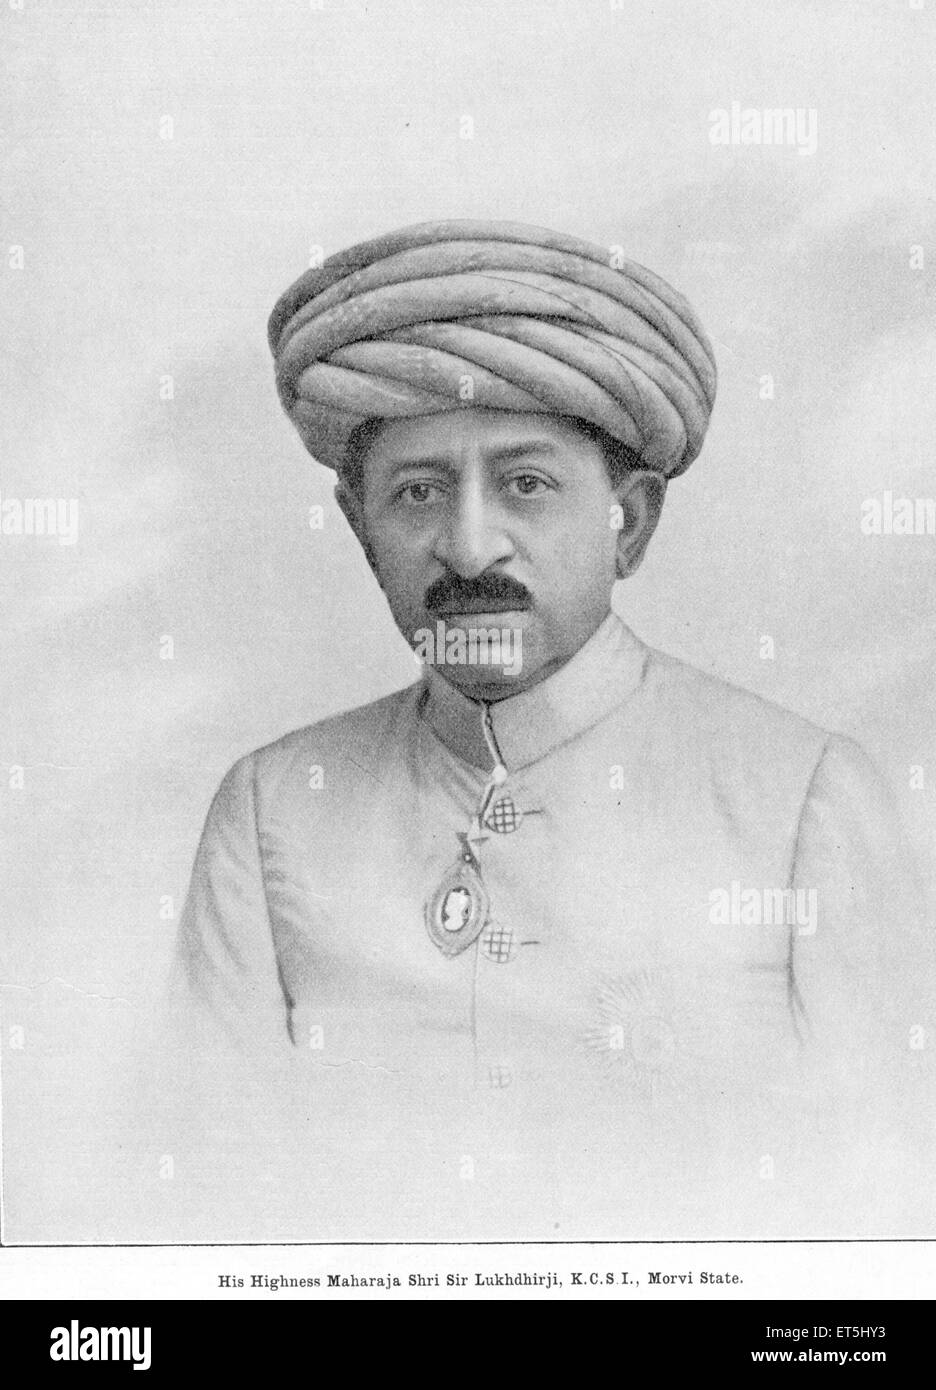 Princes de l'Inde ; Son Altesse le Maharaja Shri Sir Lukhdhirji K.C.S.I ; . ; Morvi ; l'État du Gujarat en Inde ; Rajkot ; PAS DE MR Banque D'Images